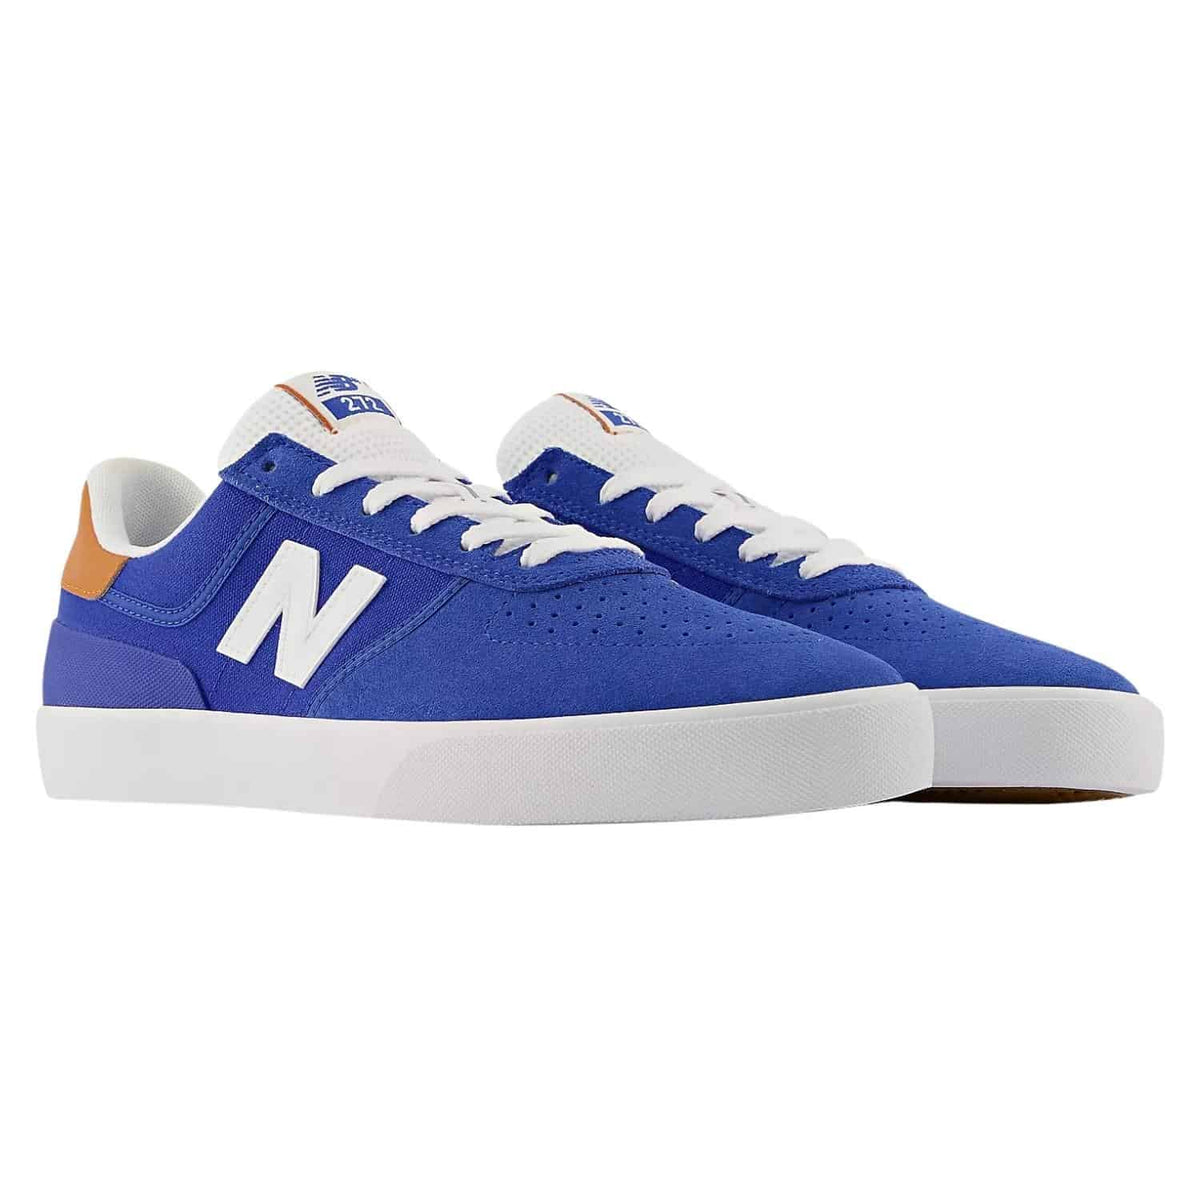 New Balance Numeric NM272 Skate Shoes - Royal Blue/White - Mens Skate Shoes by New Balance Numeric